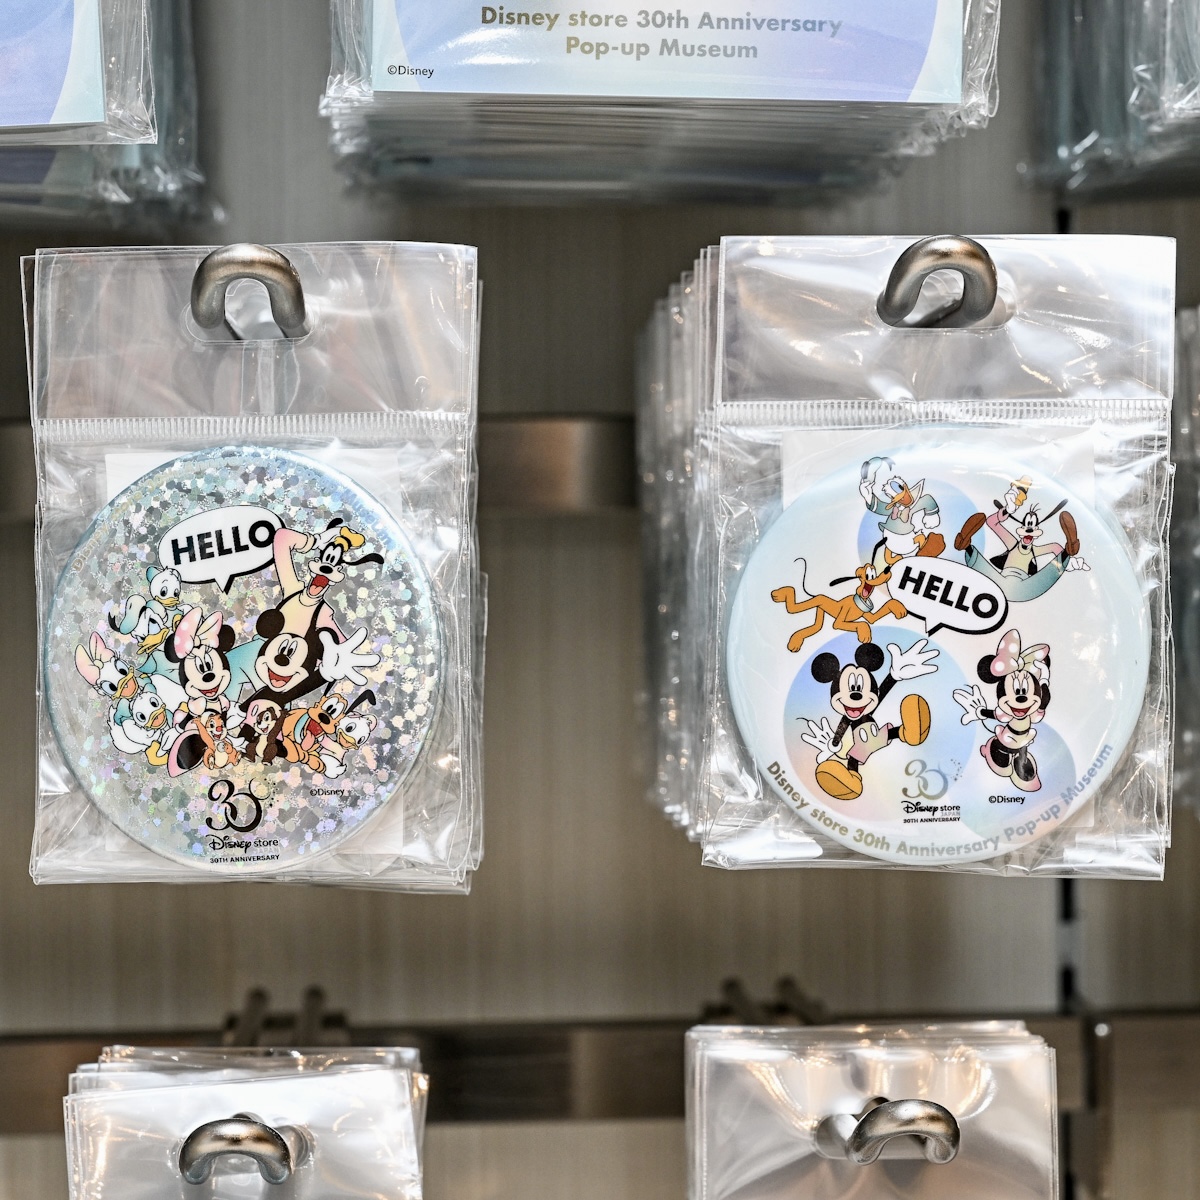 「Disney store 30th Anniversary Pop-up Museum」限定アイテム缶バッチ